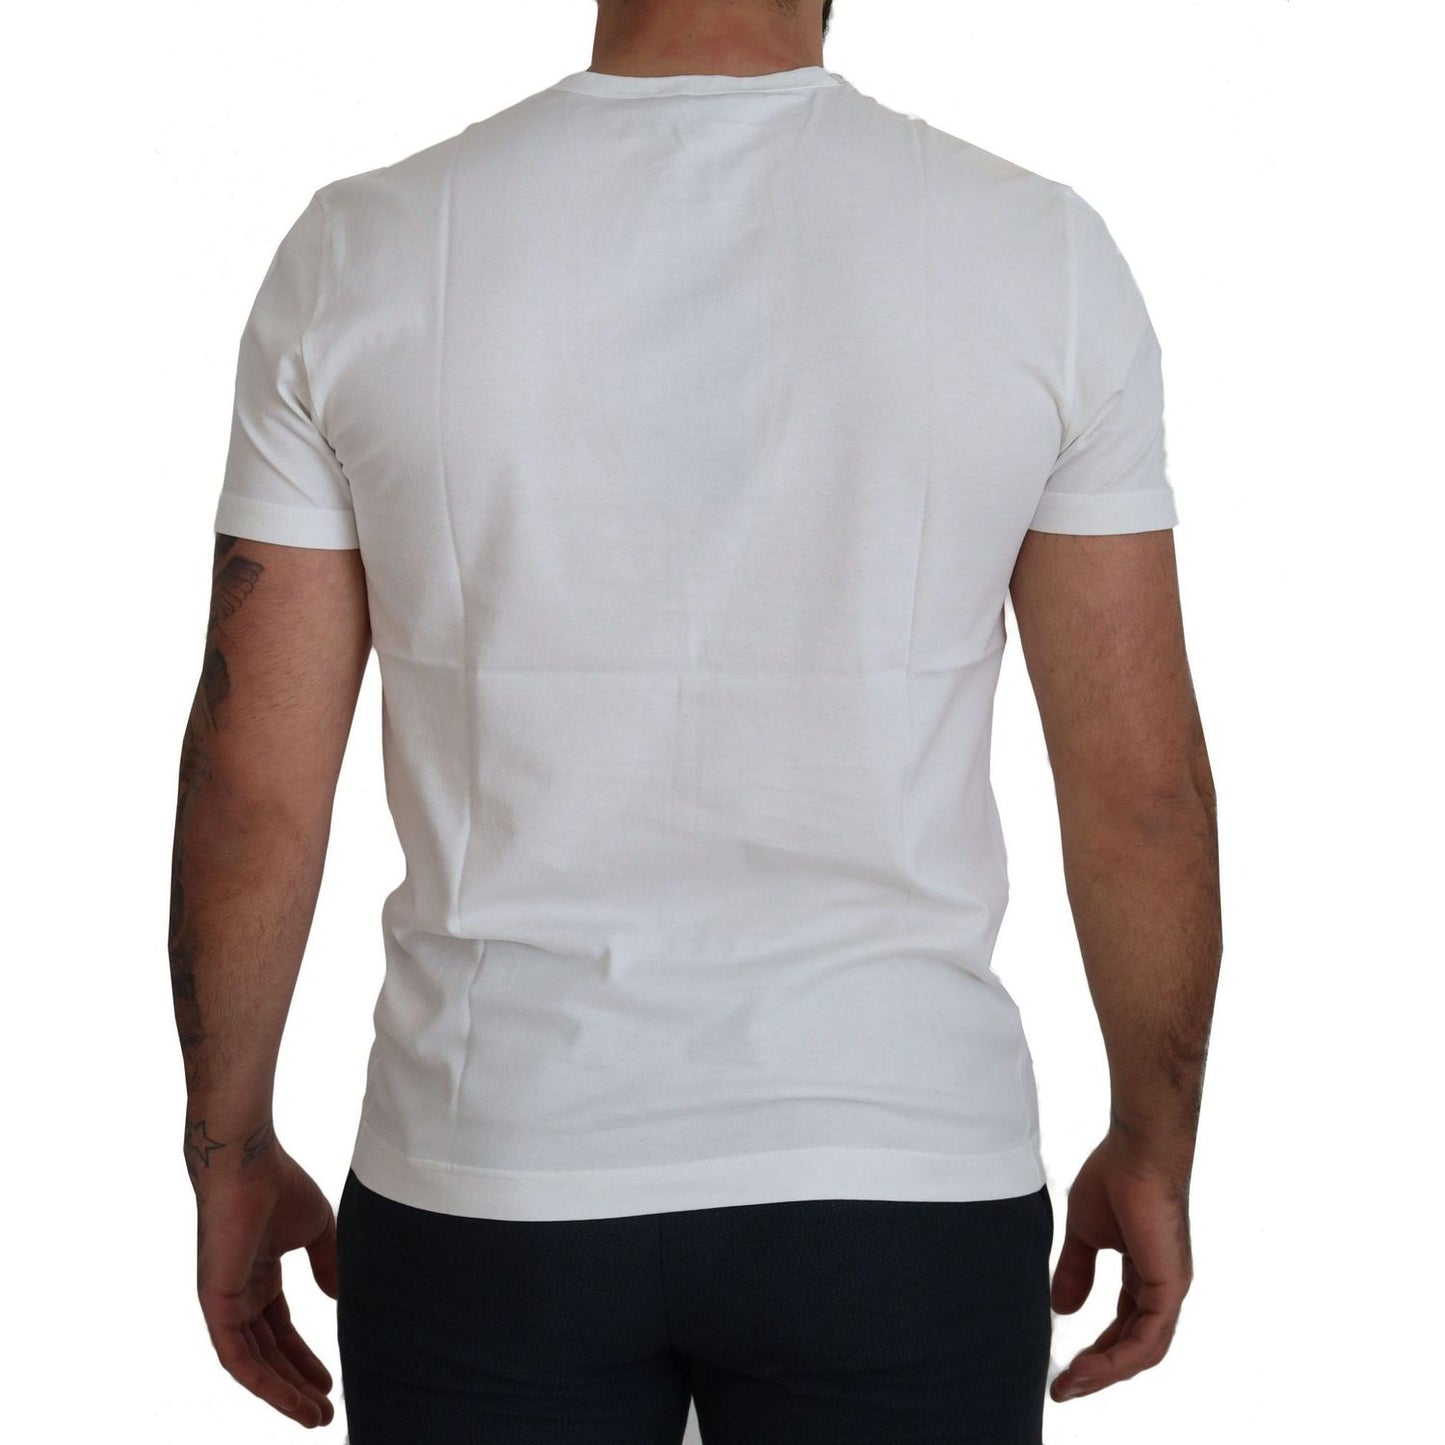 Dolce & Gabbana Chic White Logo Print Cotton Tee white-logo-cotton-amor-magister-t-shirt